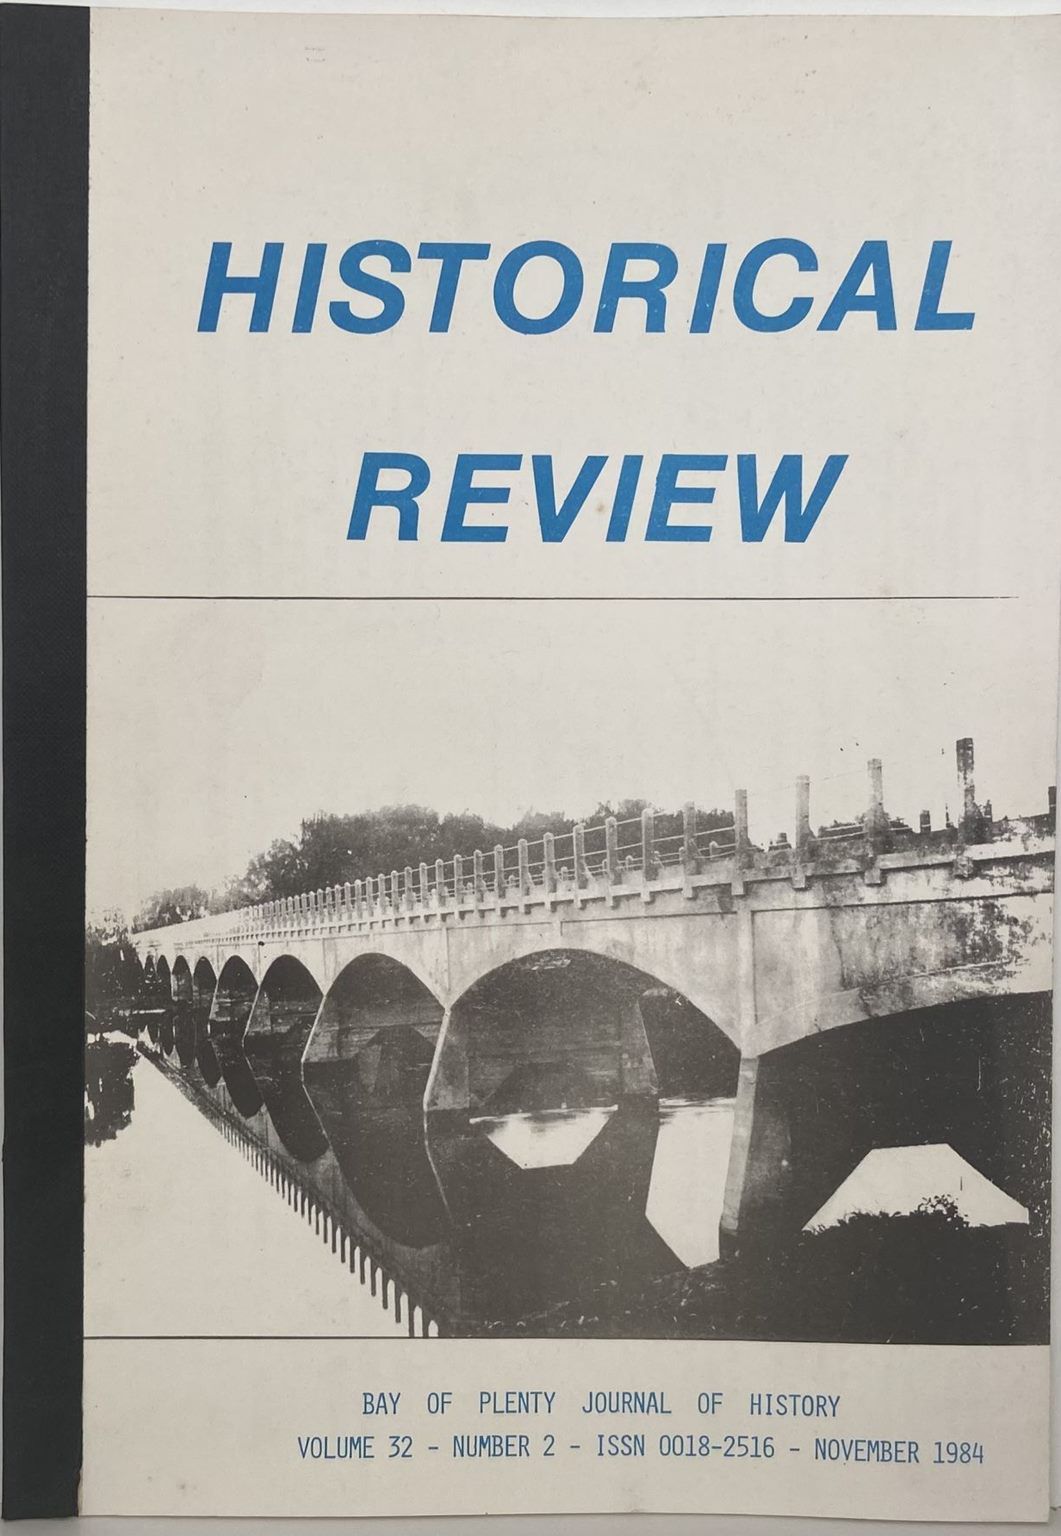 HISTORICAL REVIEW: Bay of Plenty Journal of History - Vol. 32, No. 2 - Nov 1984